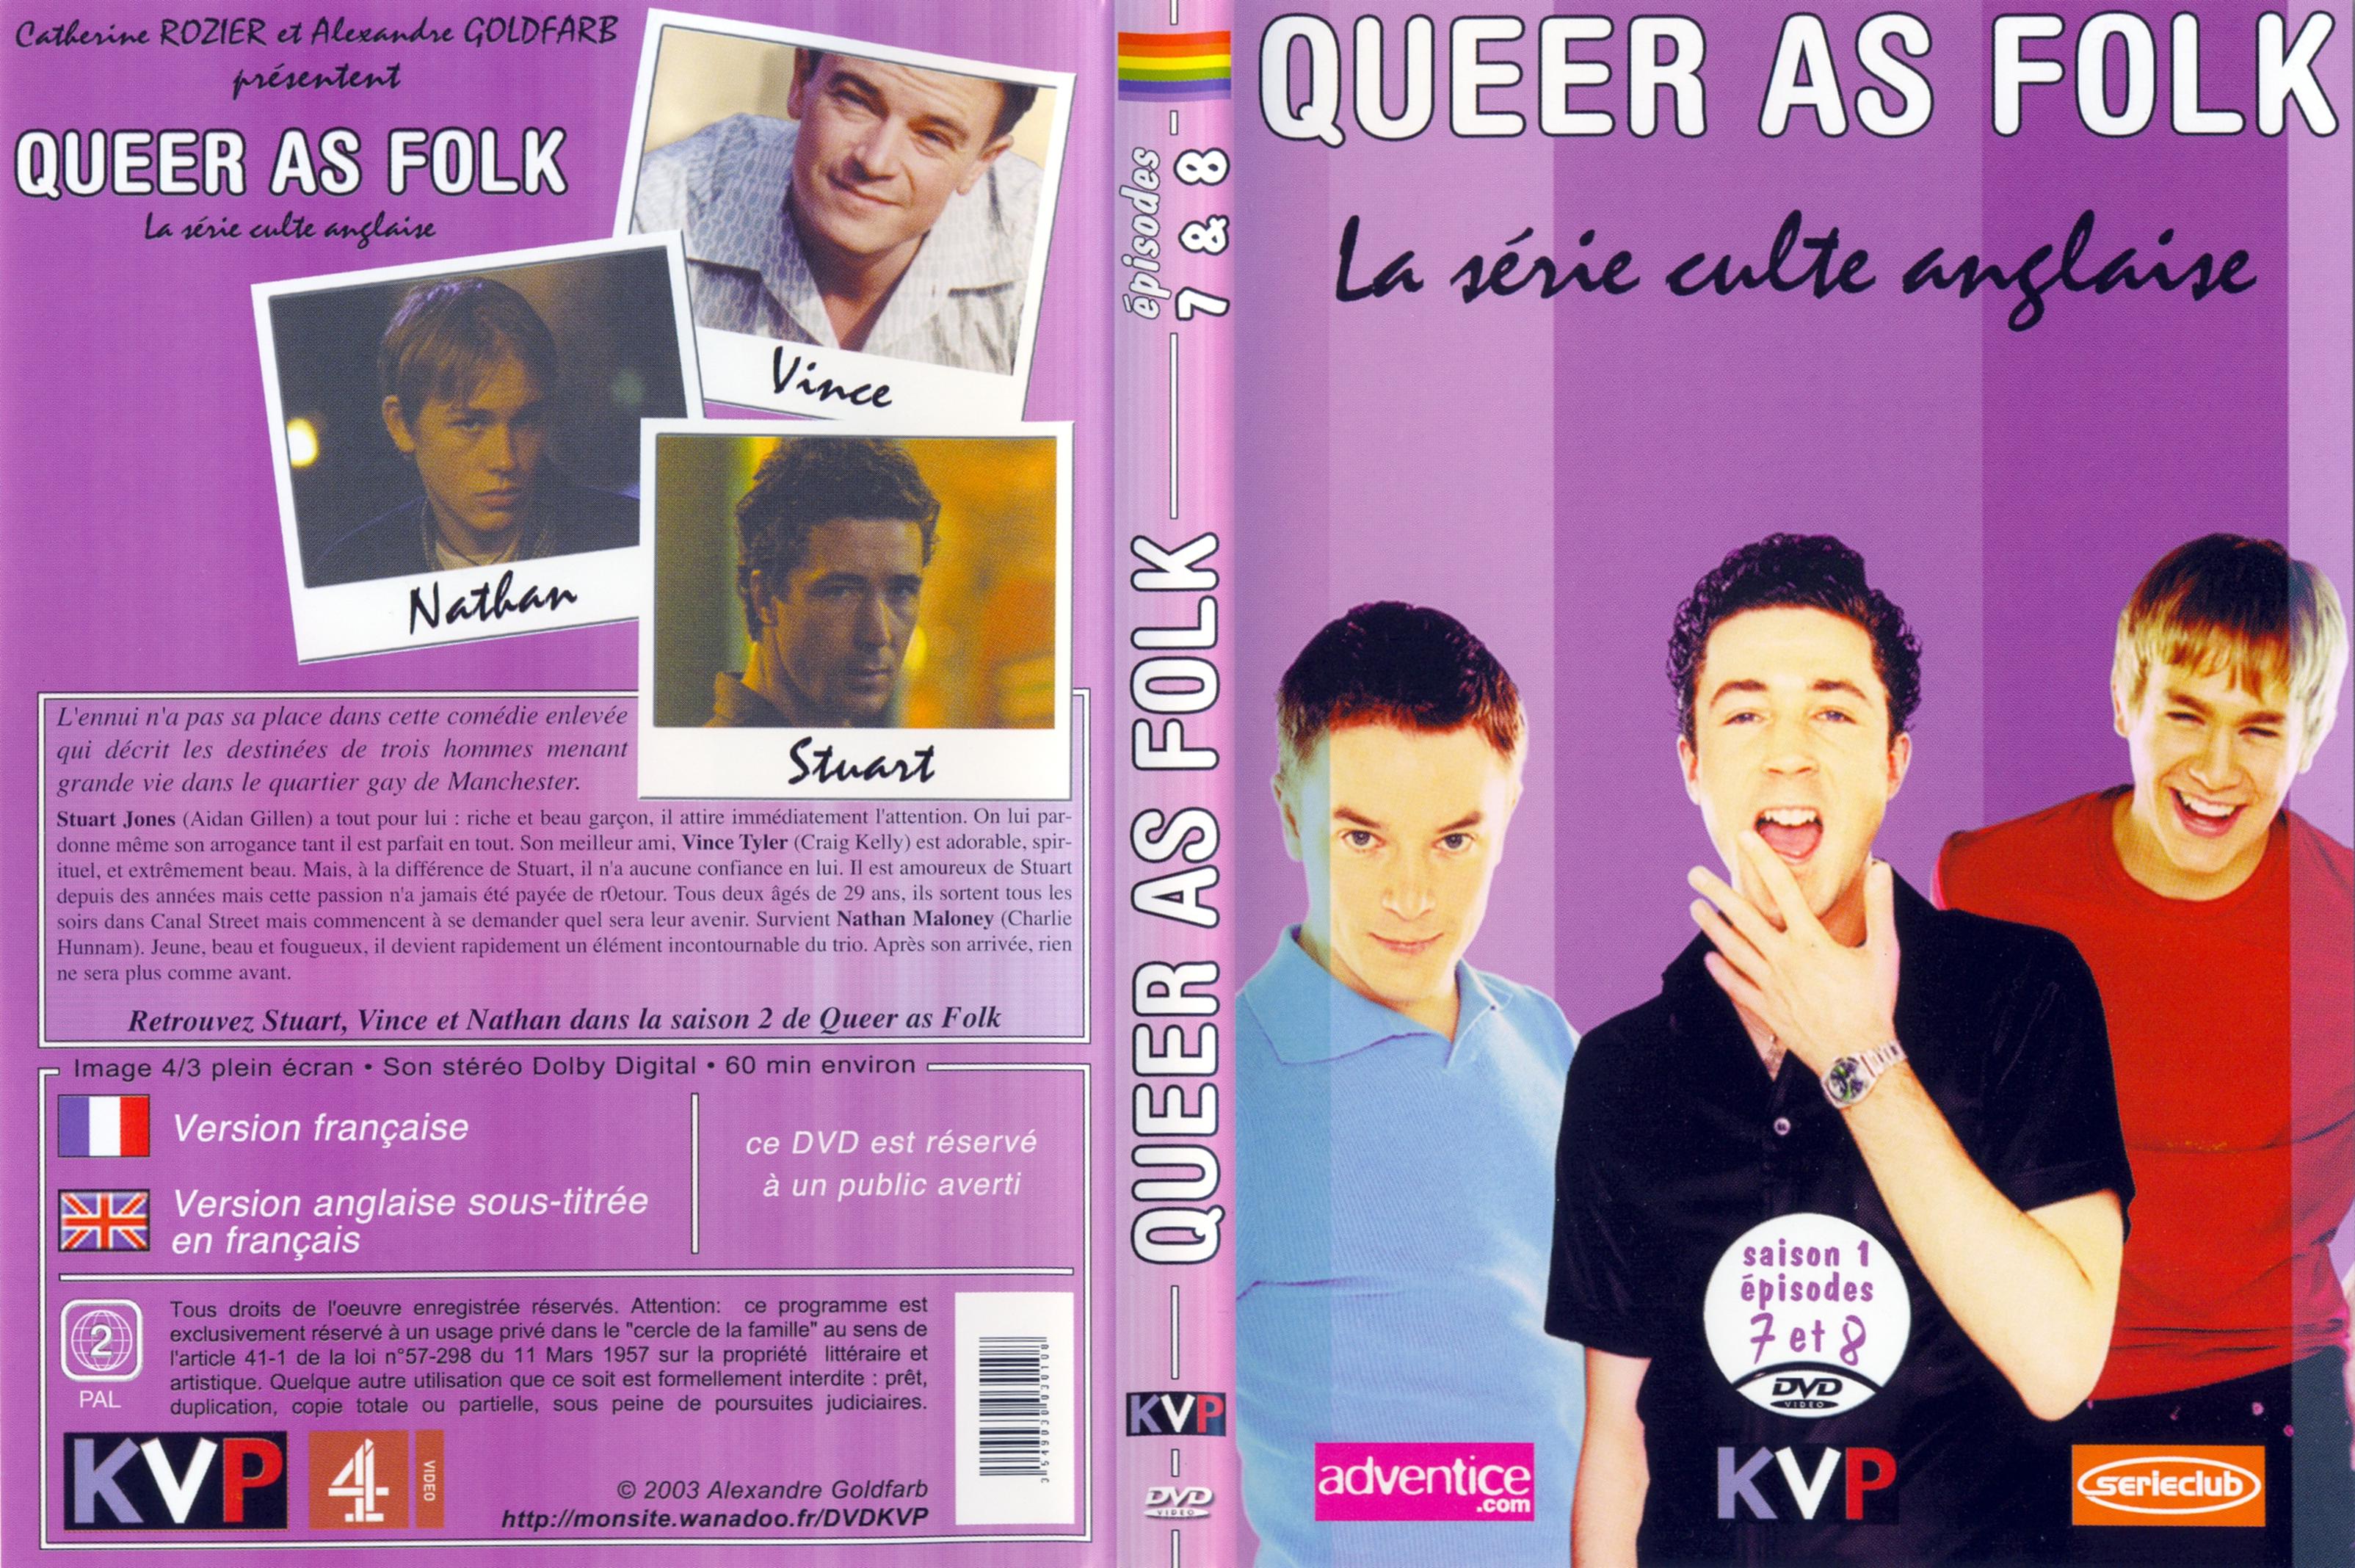 Jaquette DVD Queer as Folk - Episode 7 et 8